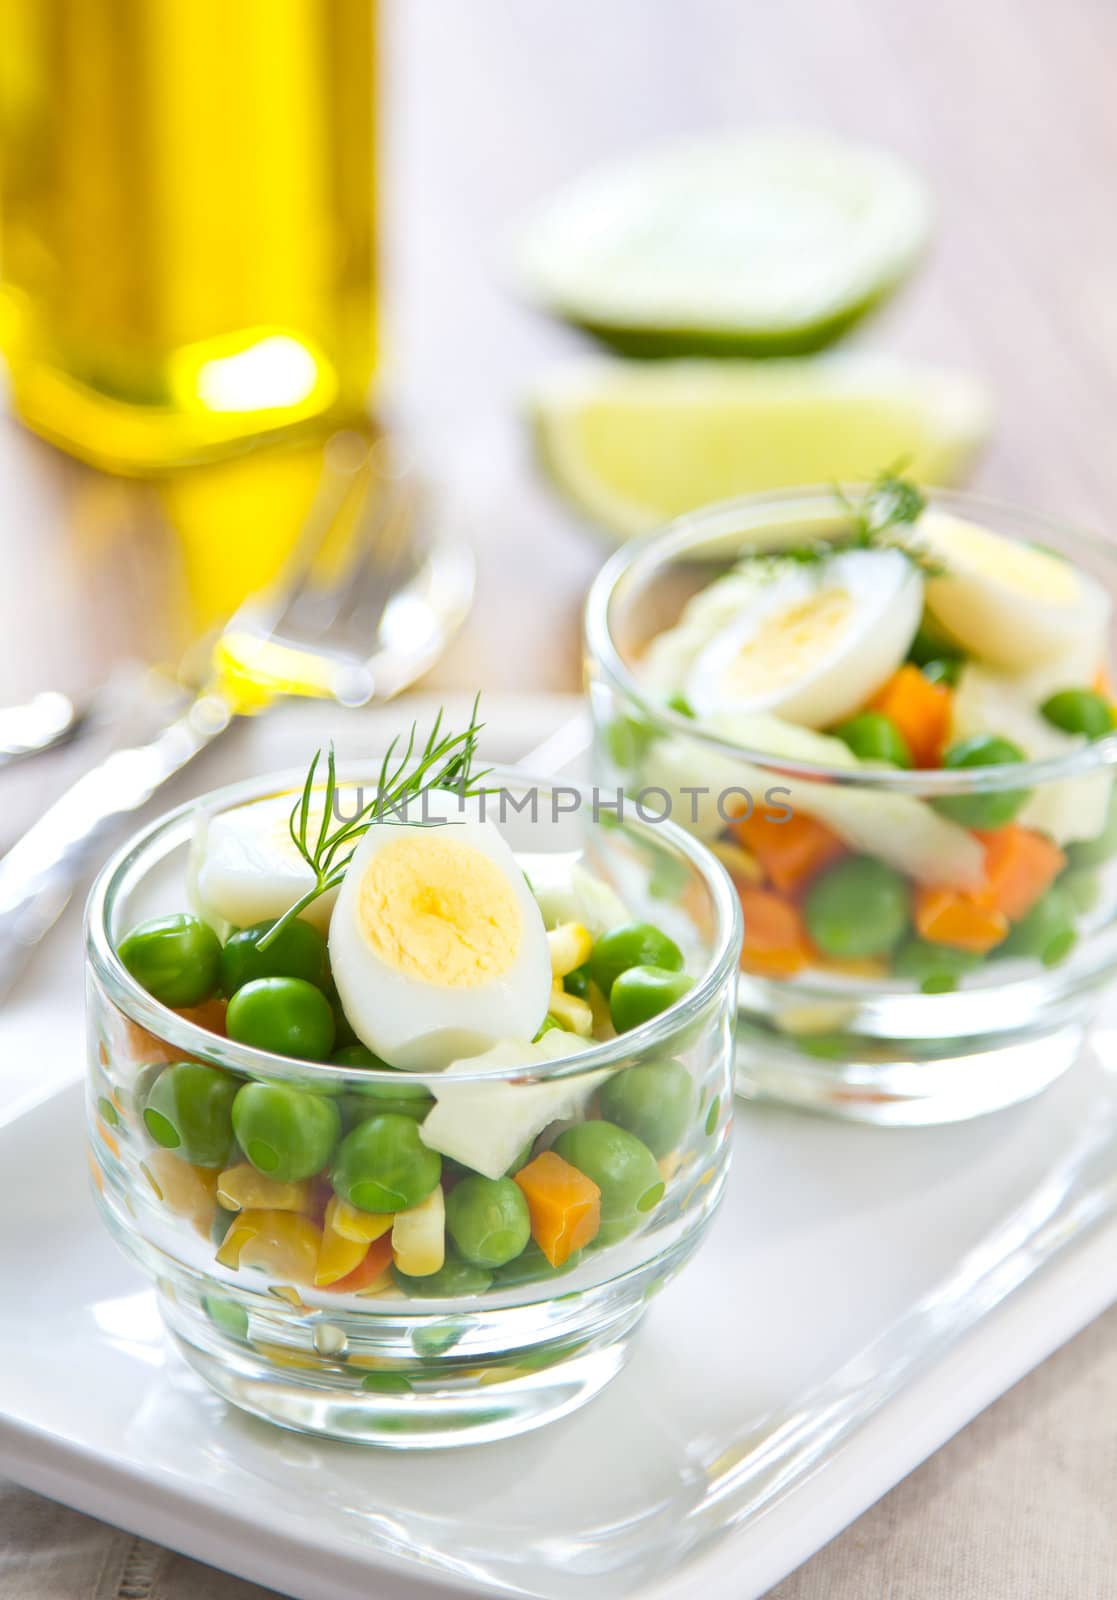 Qail egg salad by vanillaechoes